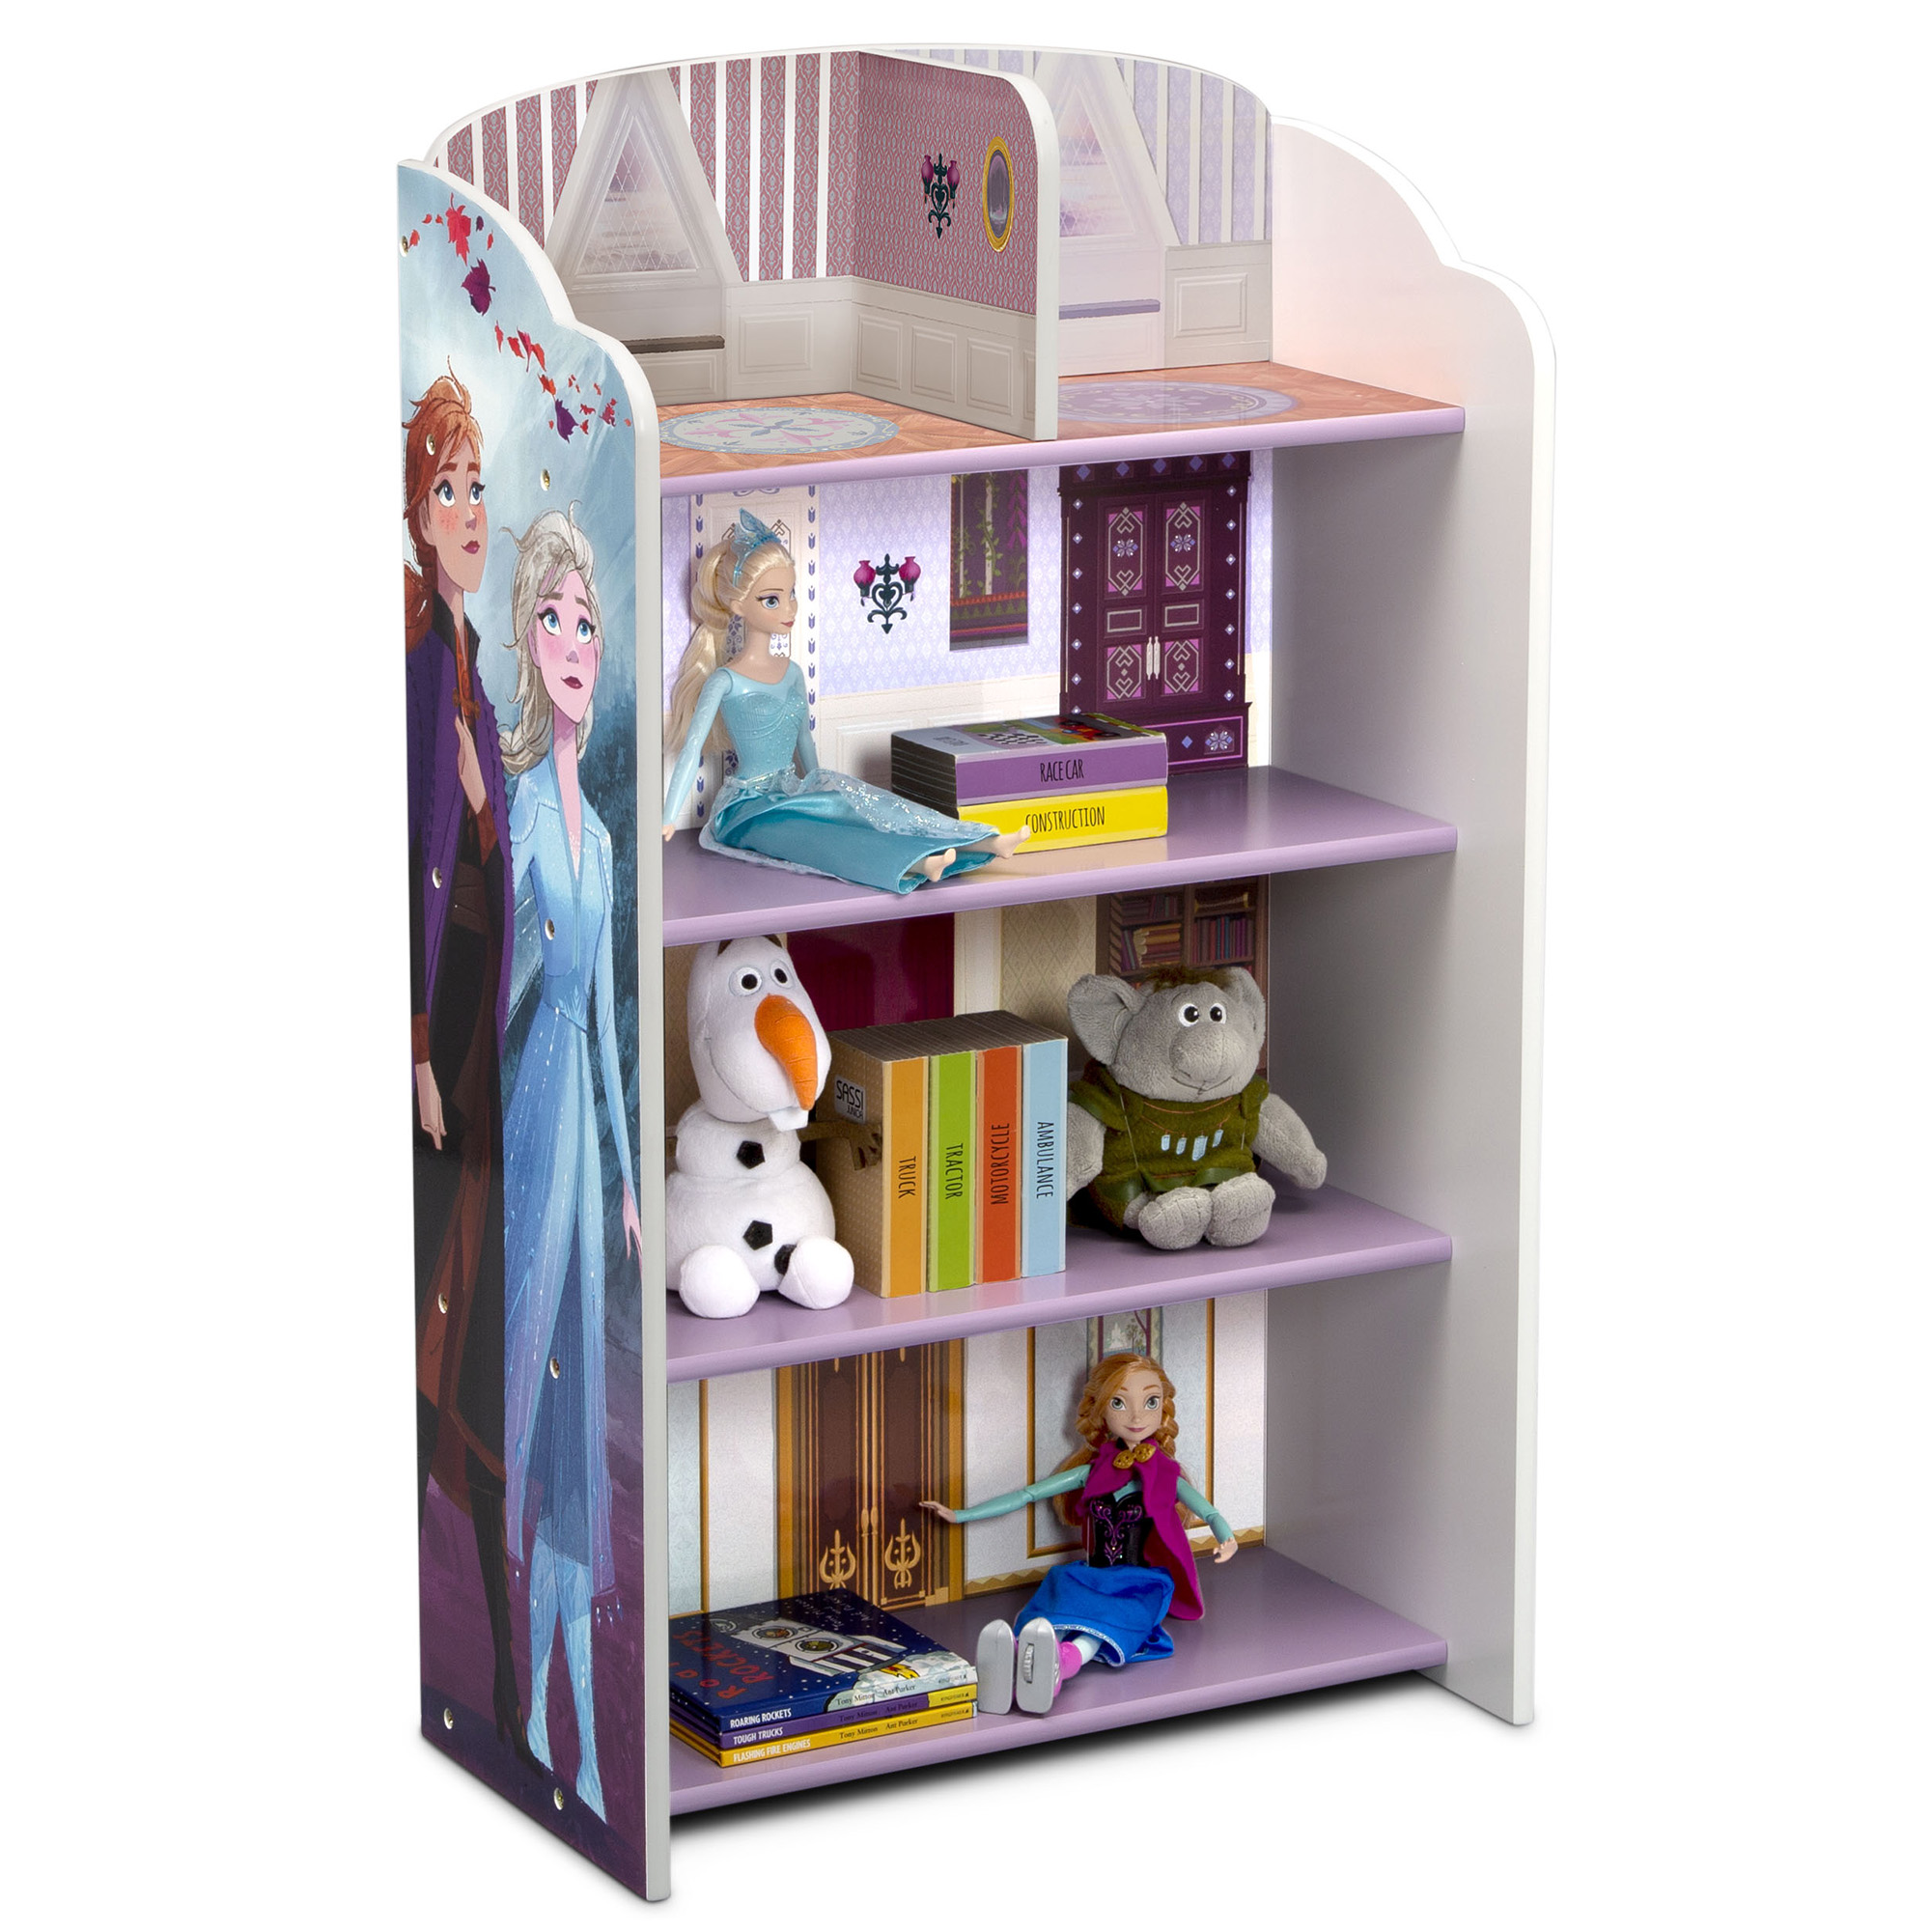 Disney Frozen II Wooden Playhouse 4-Shelf Bookcase for Kids by Delta Children, Greenguard Gold Certified - image 1 of 11